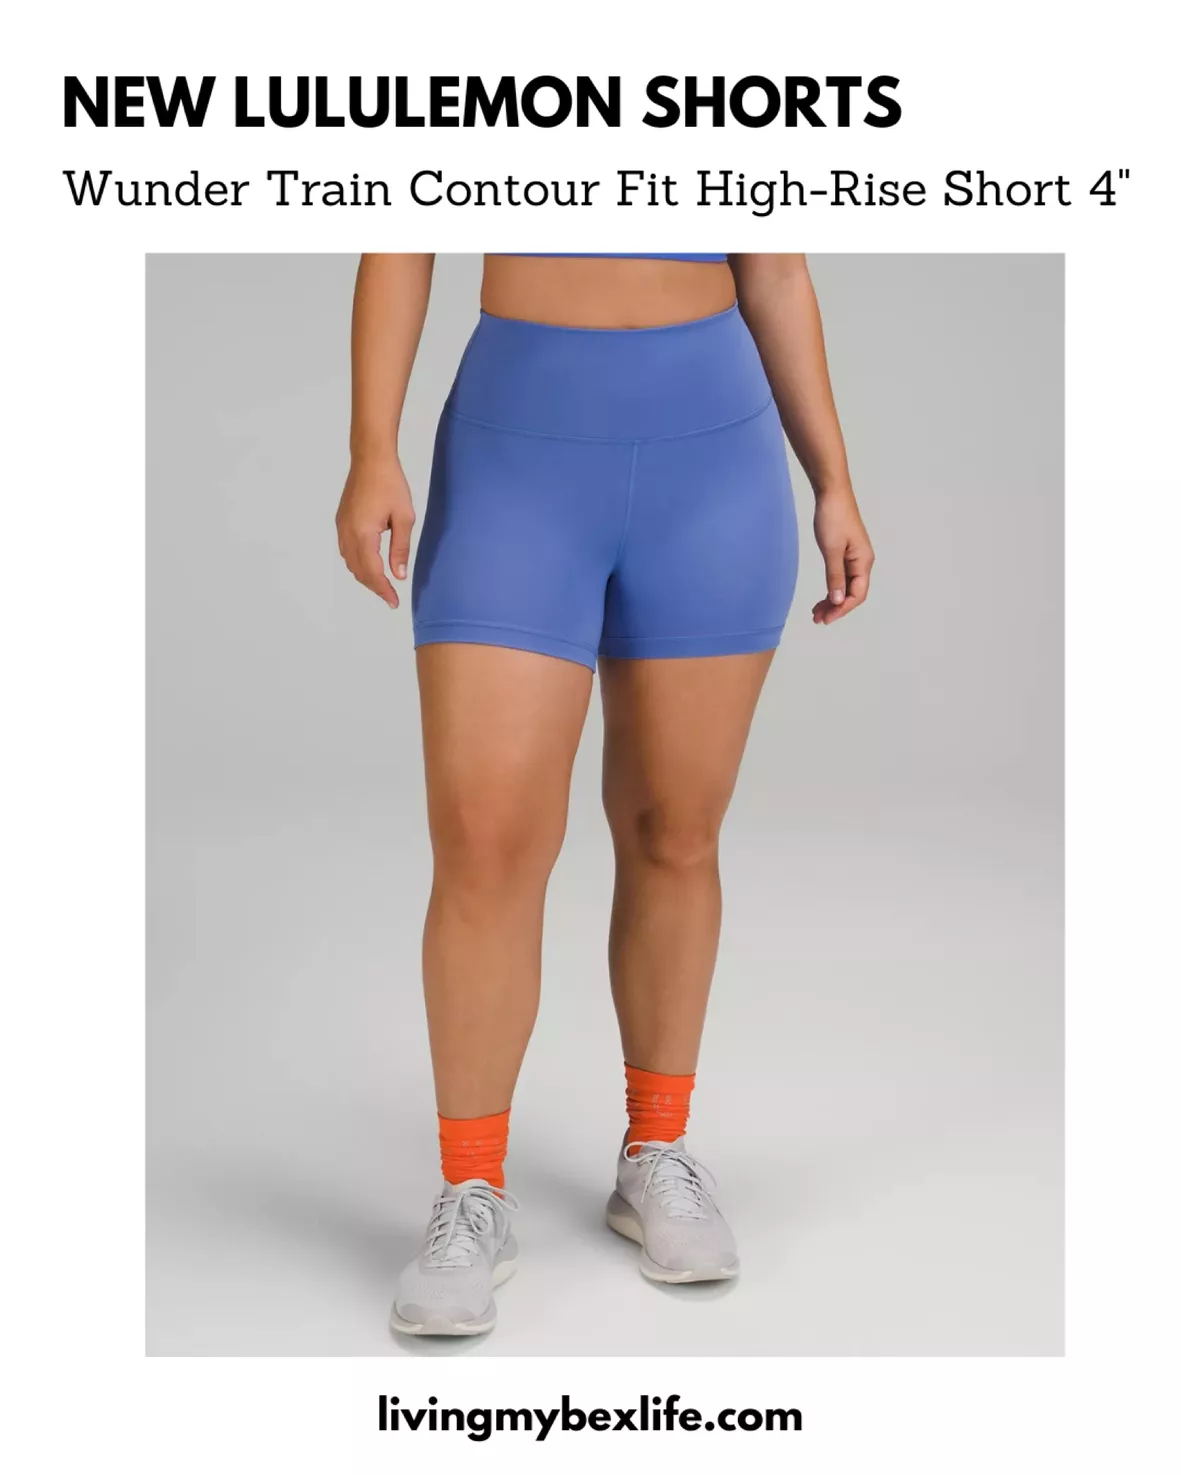 Wunder Train High-Rise Short 4, Women's Shorts